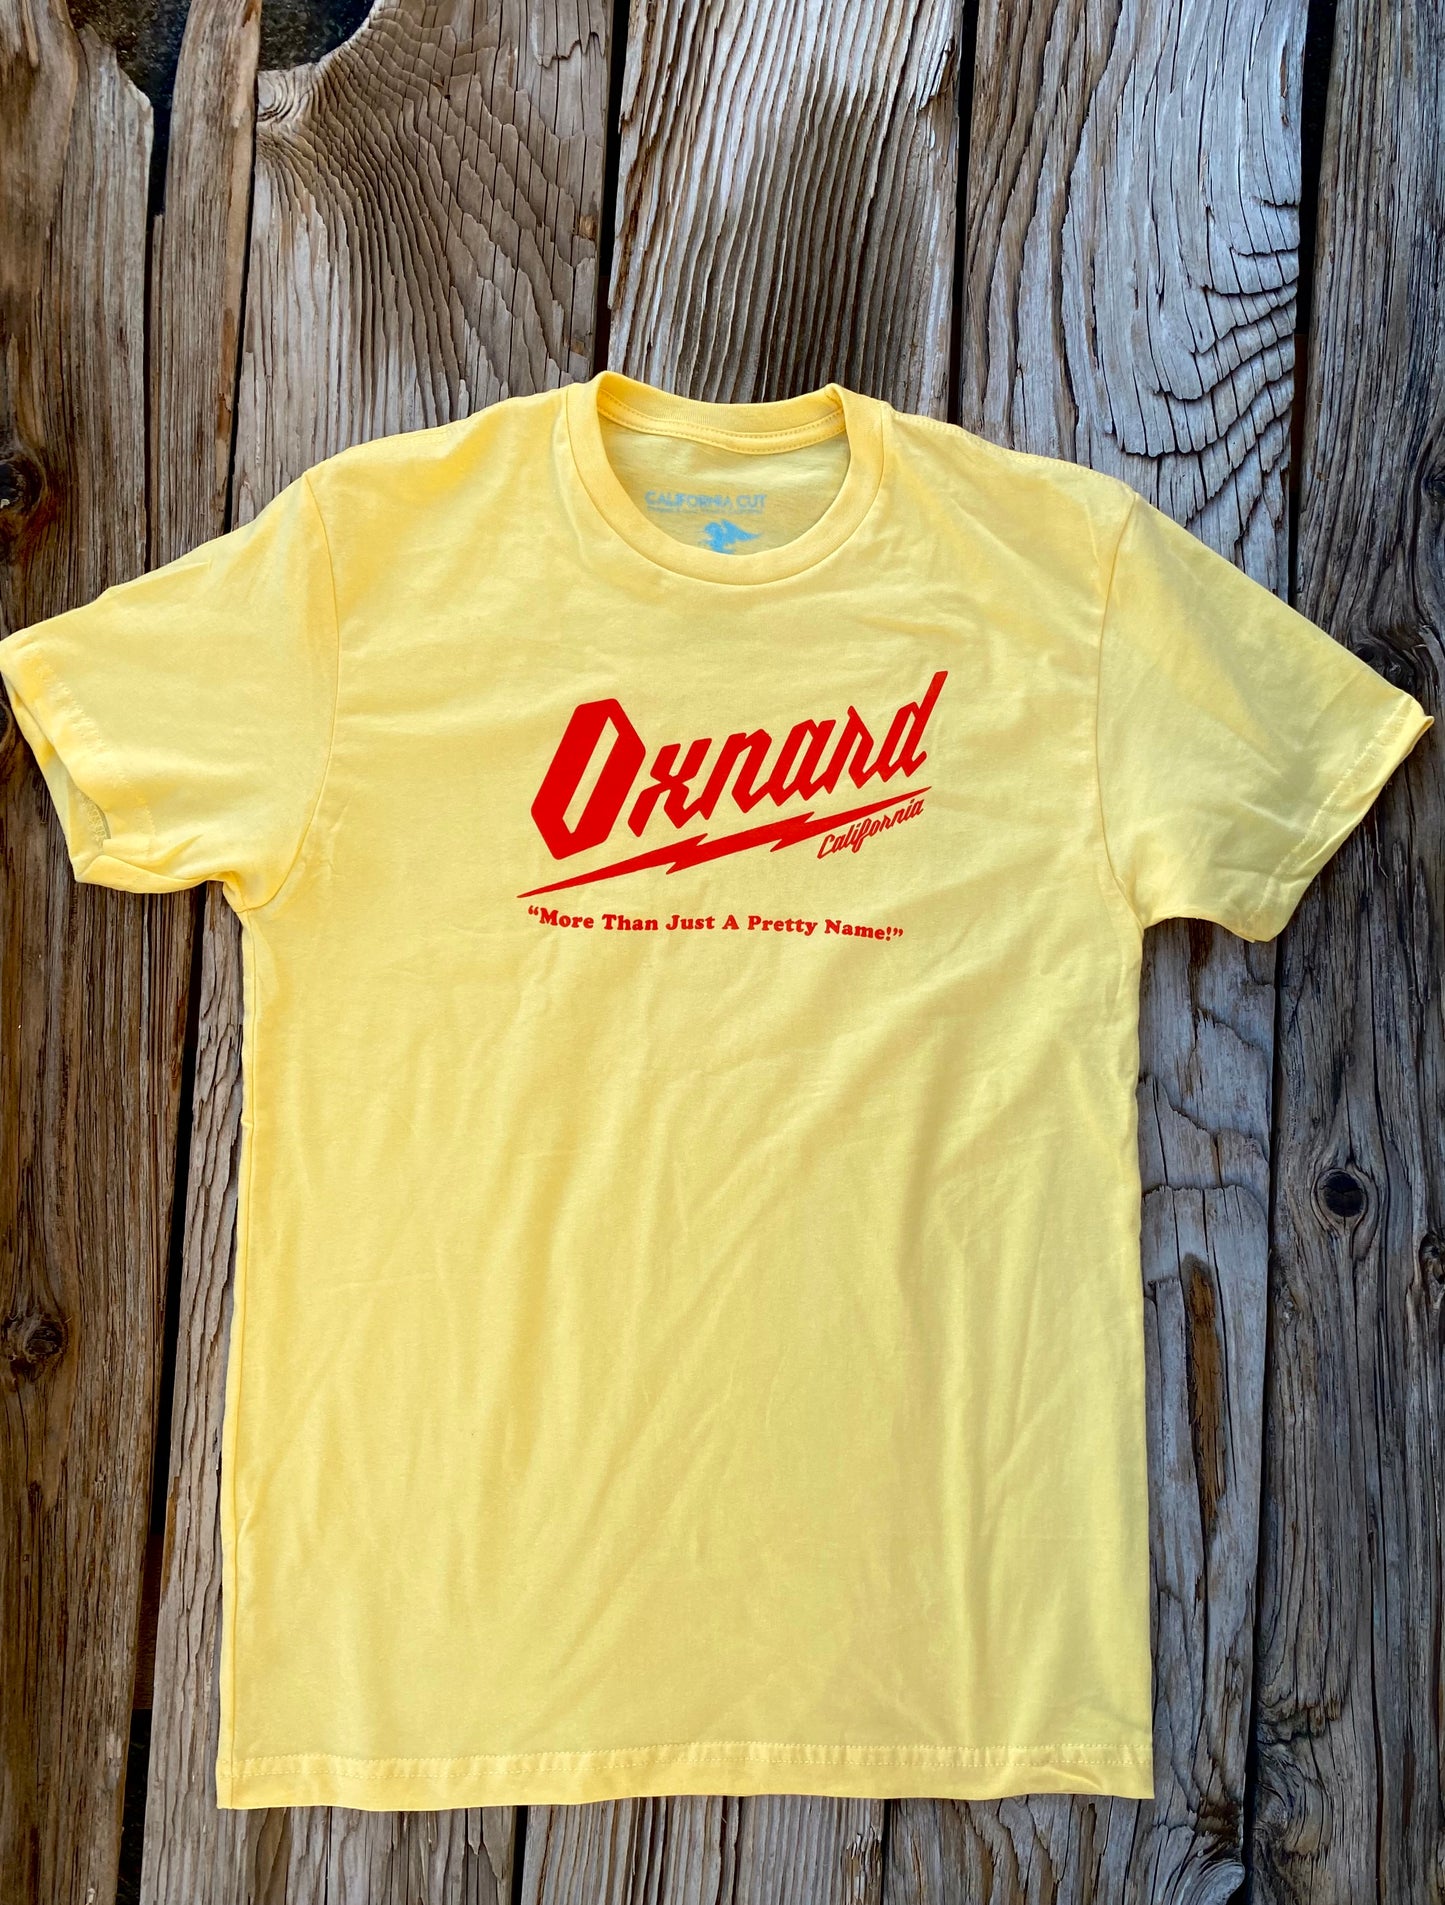 Oxnard Bolt Tshirt